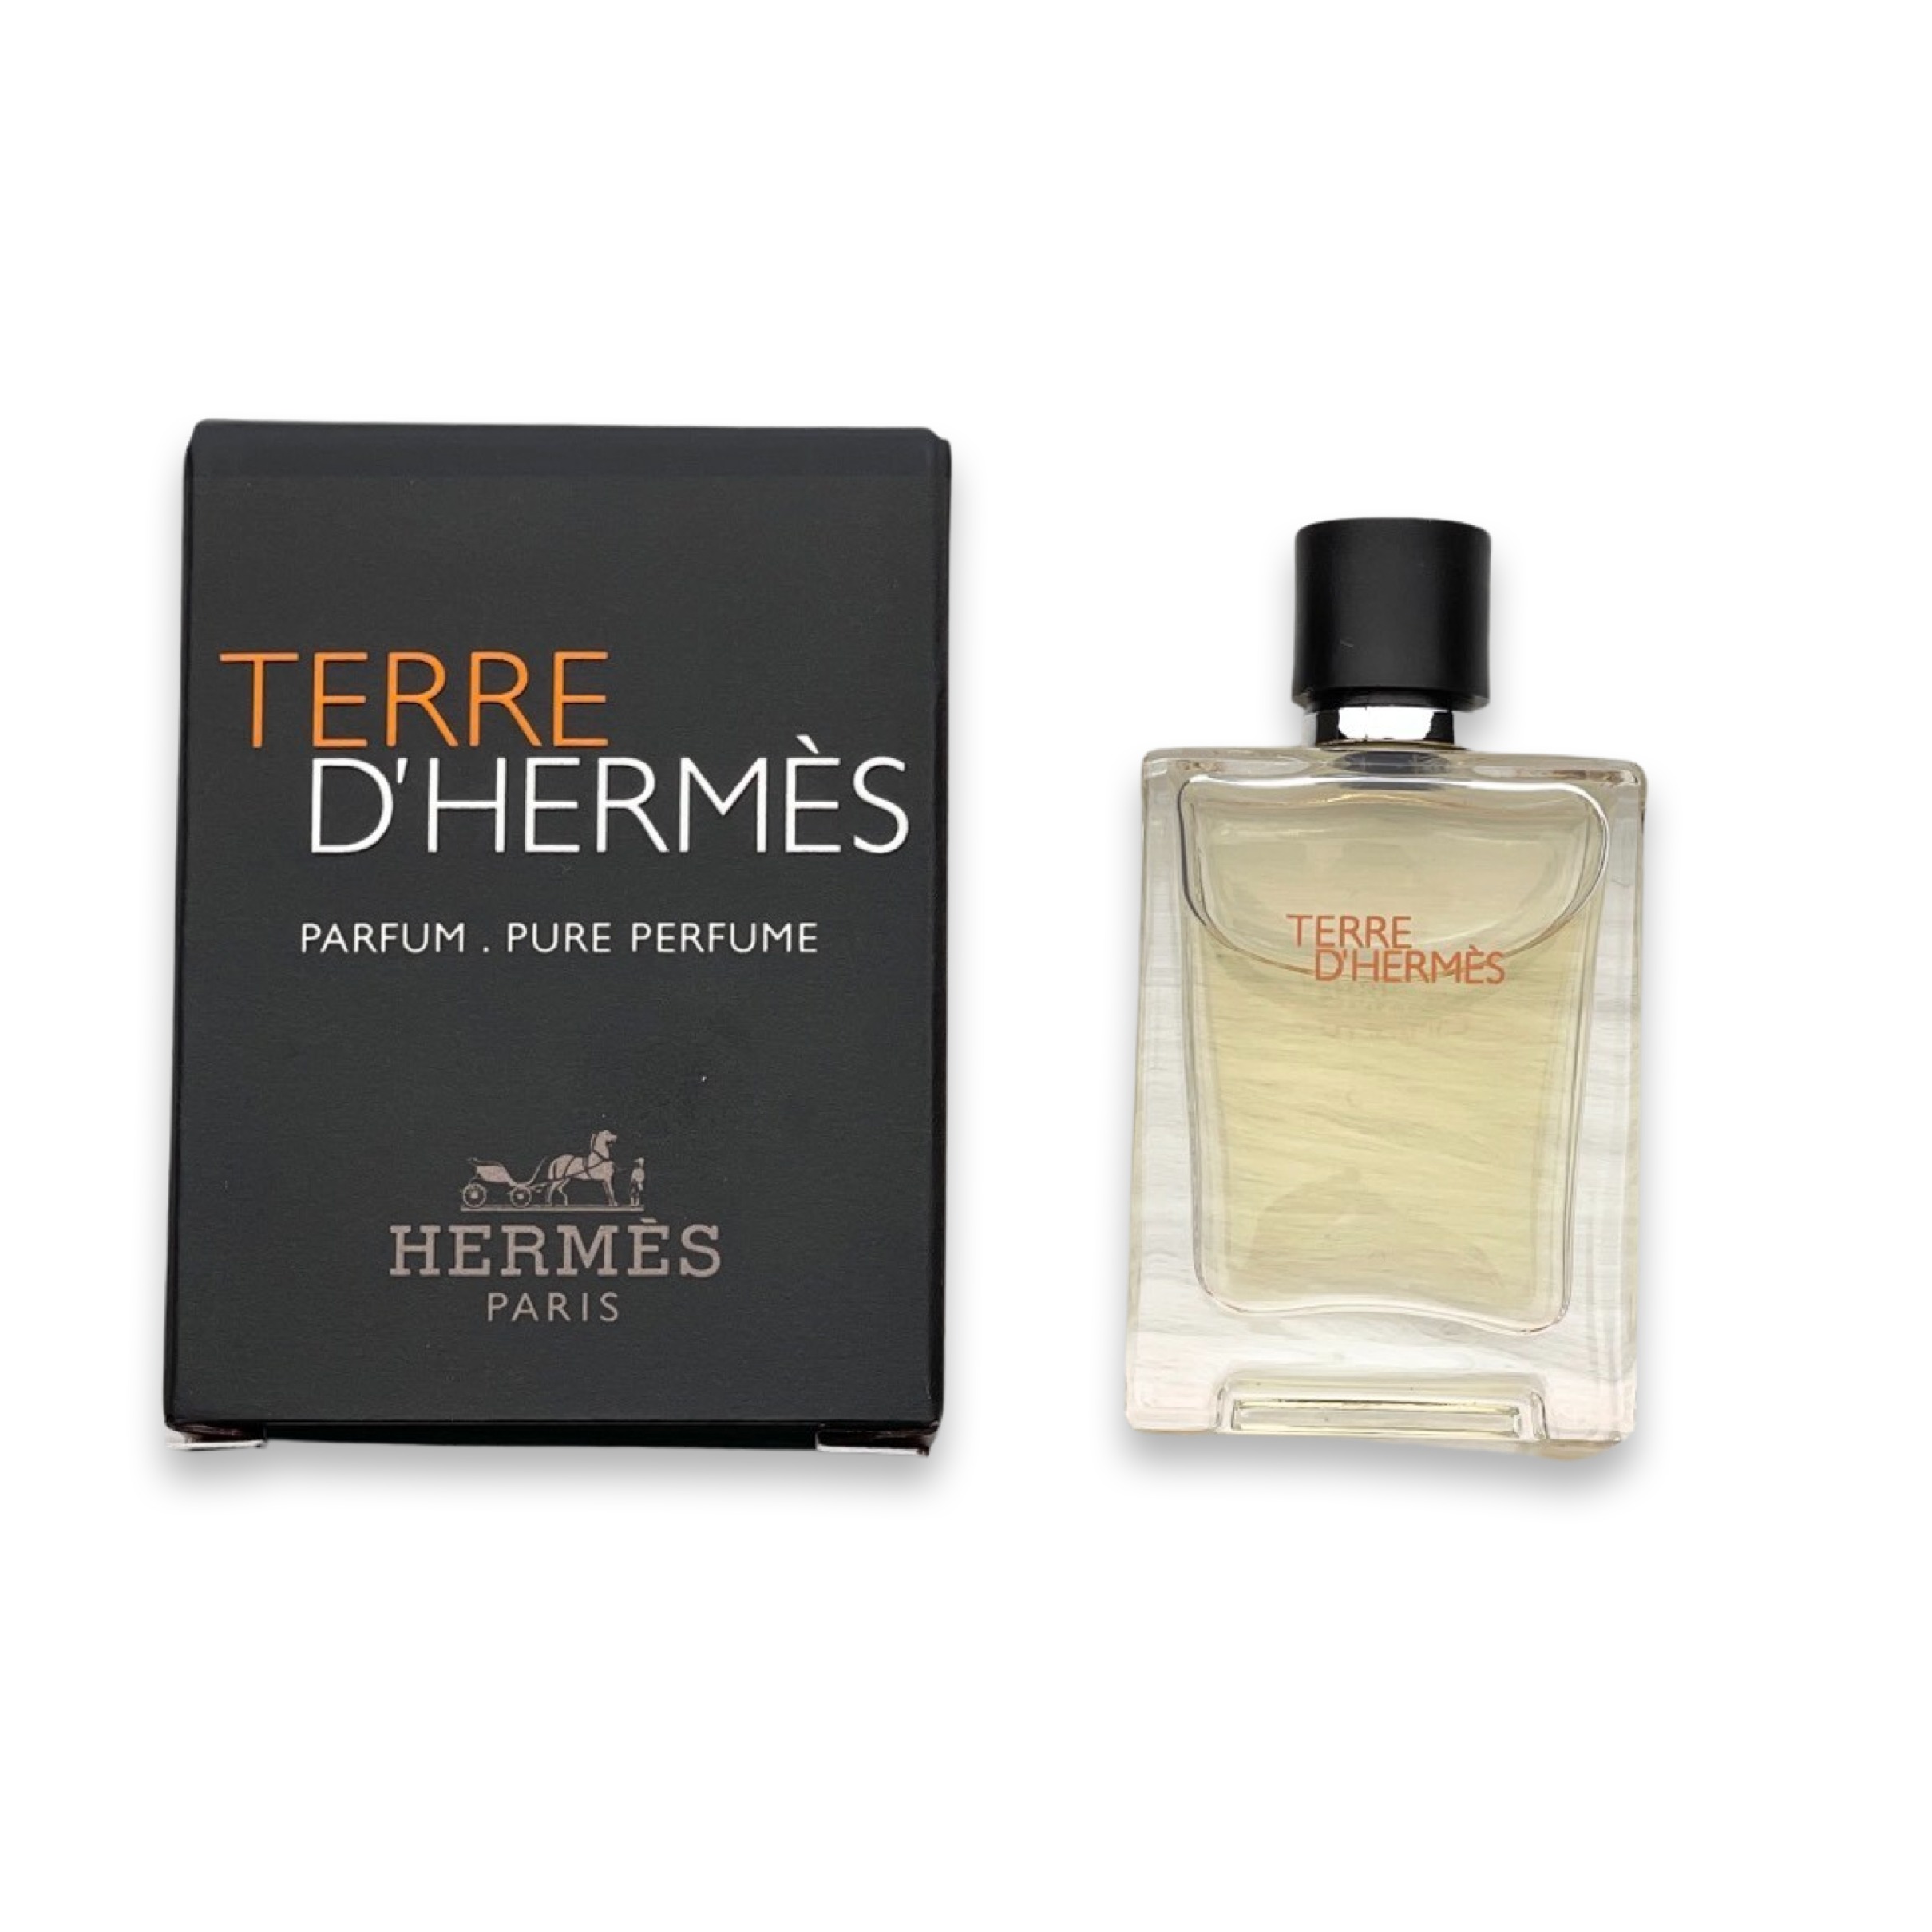 Terre D'hermes Parfum / Travel Size (5ml)